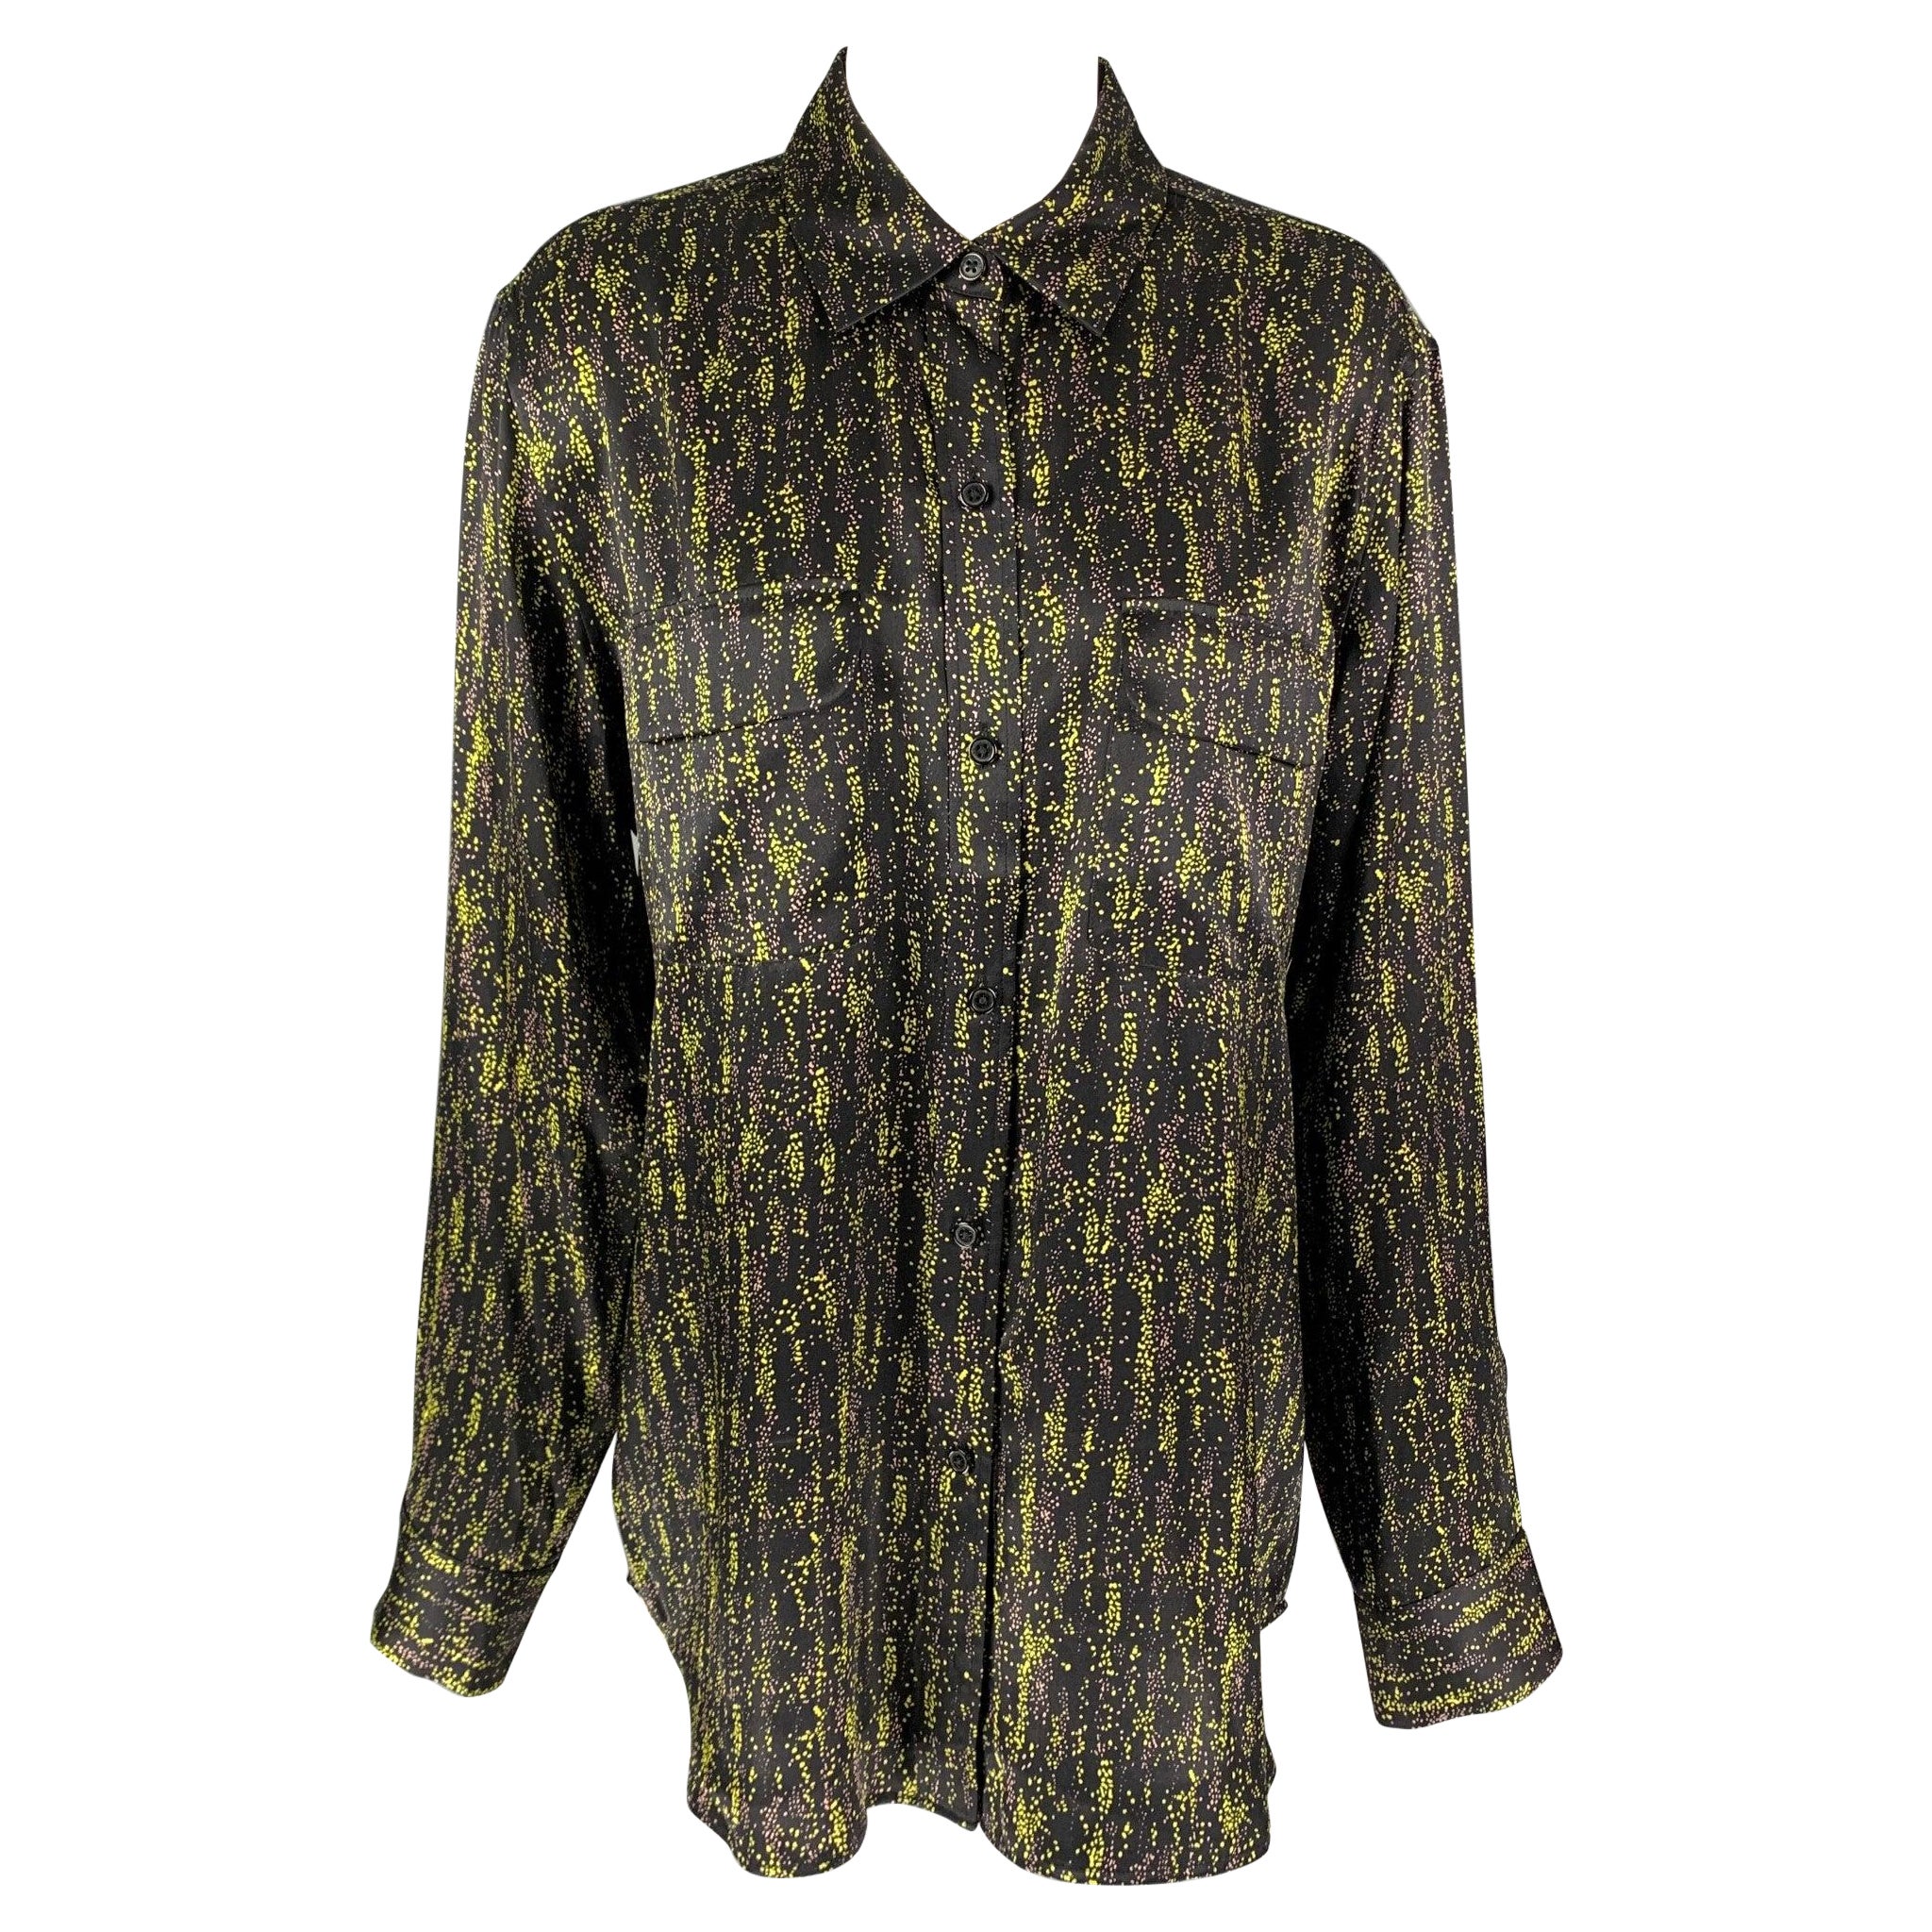 EQUIPMENT FEMME Size L Black Green Print Button Up Shirt For Sale